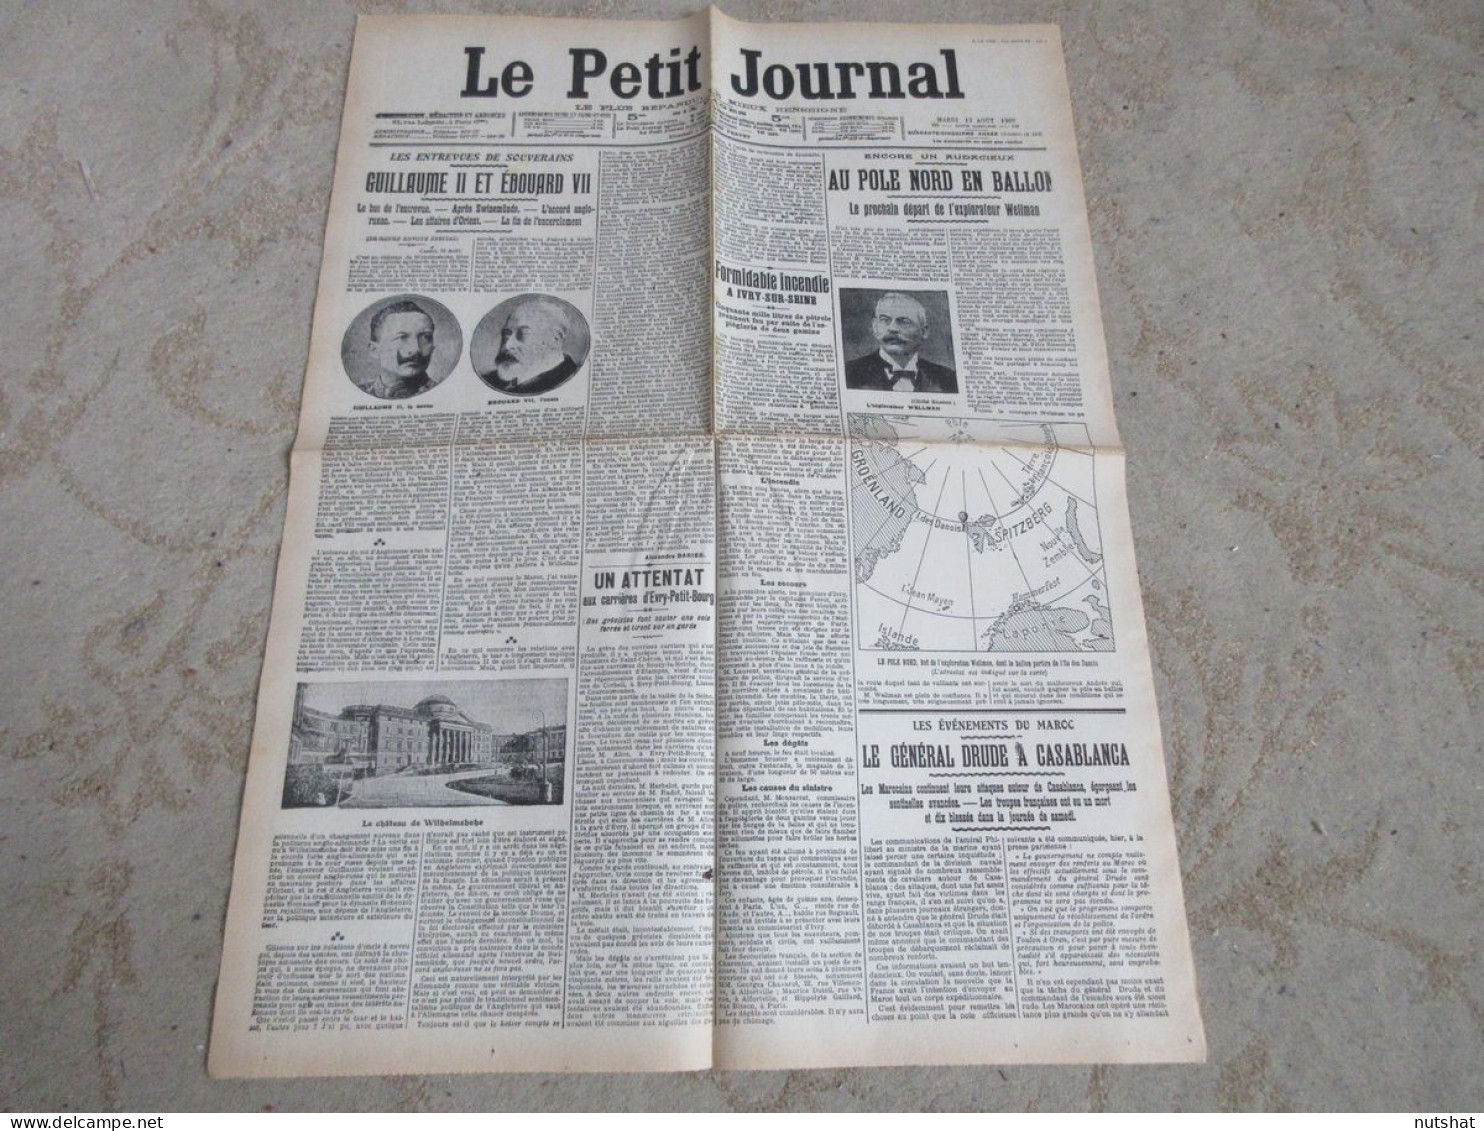 PRESSE FAC SIMILE 45 Le PETIT JOURNAL 13.08.1907 GUILLAUME II VOIT EDOUARD VII   - Le Petit Journal